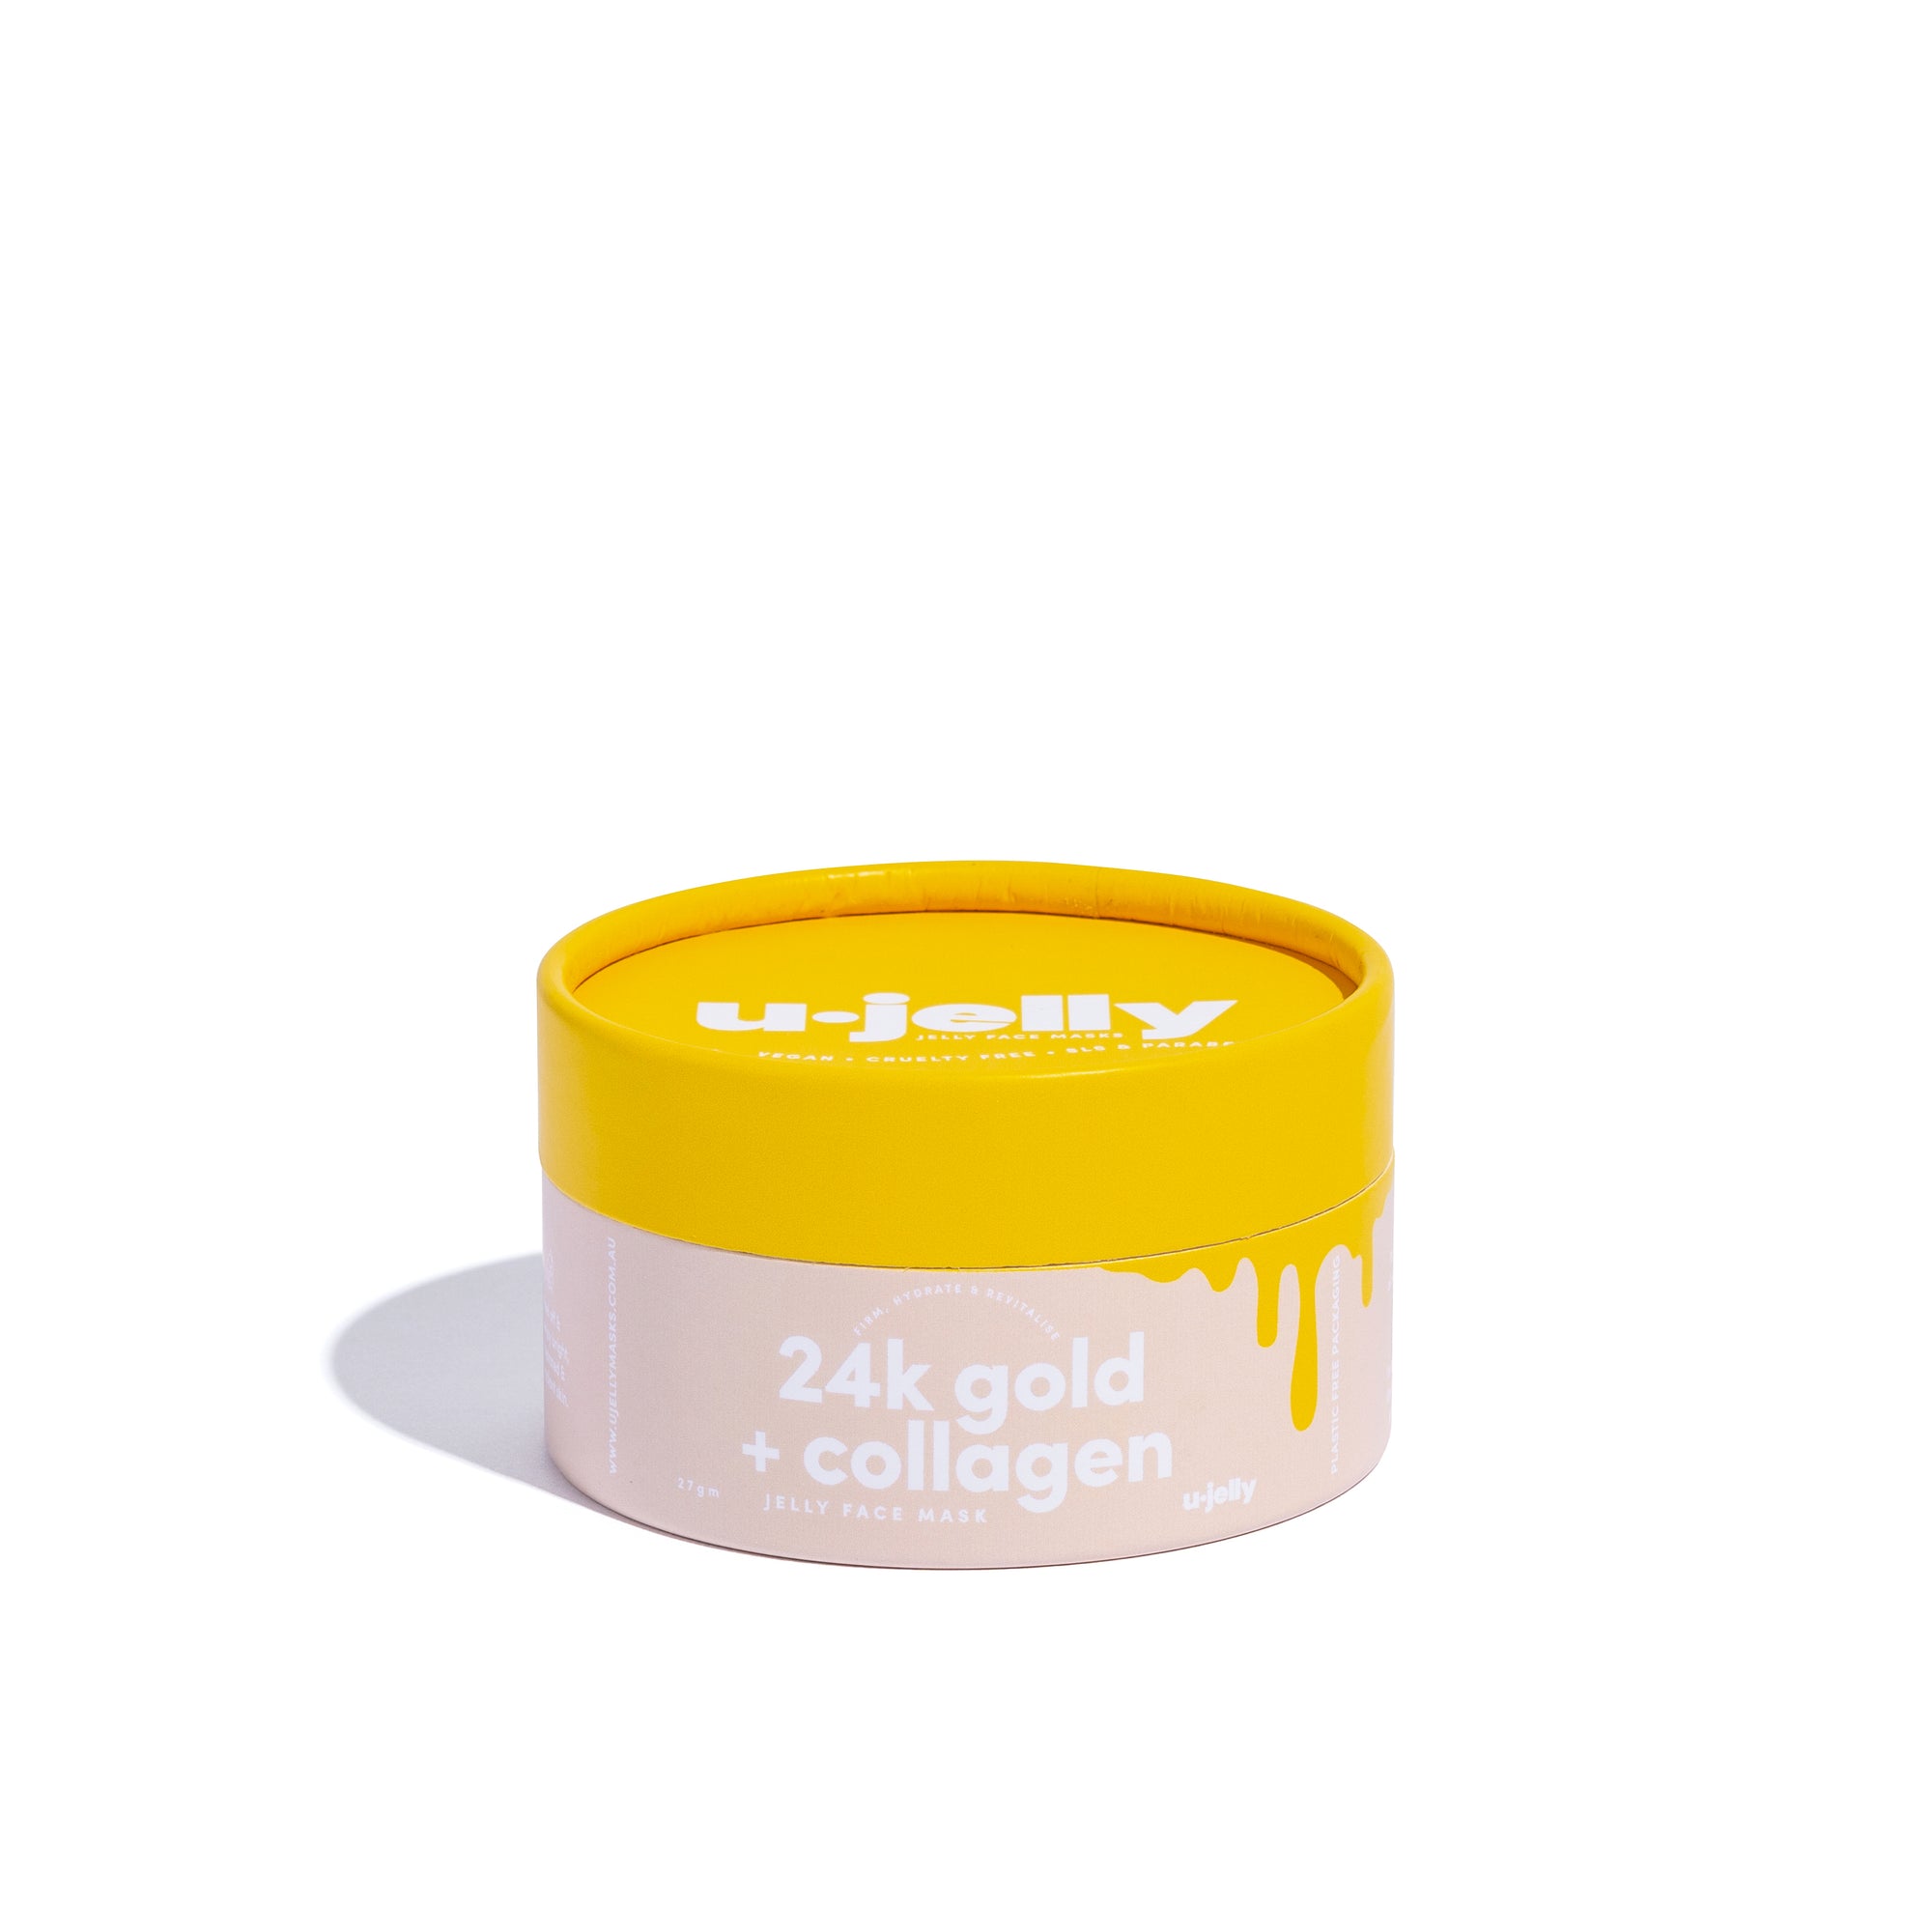 Jelly face masks - 24K gold + Collagen